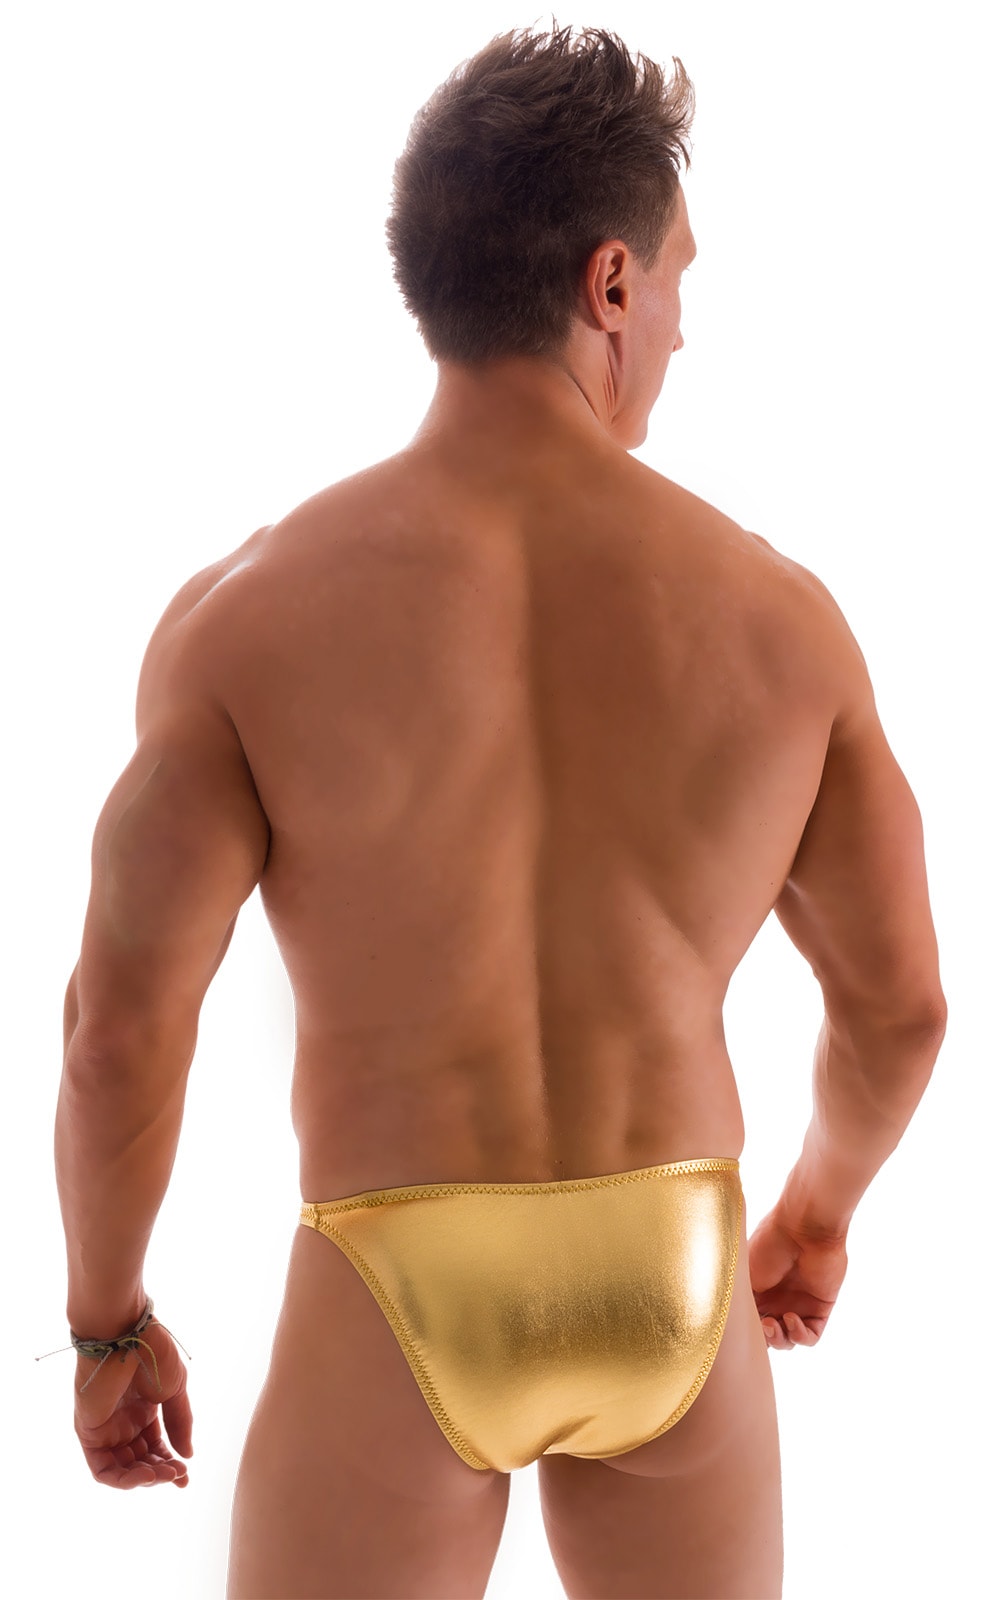 Fitted Bikini Bathing Suit in Metallic Gold, Rear View